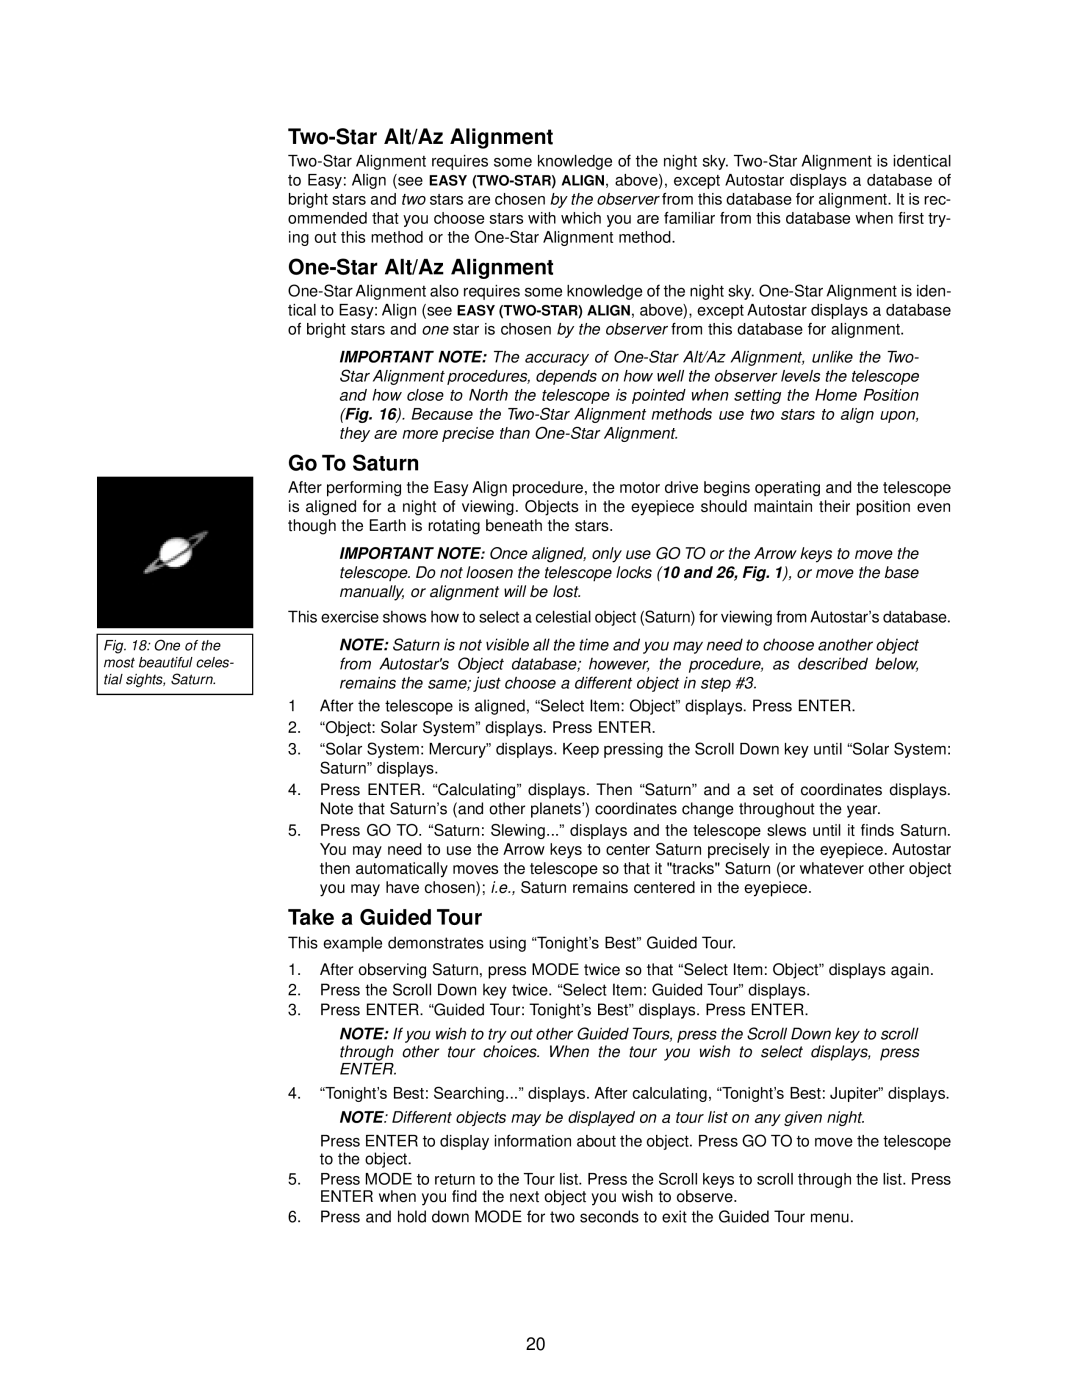 Meade DS-2000 instruction manual Two-Star Alt/Az Alignment, One-Star Alt/Az Alignment, Go To Saturn, Take a Guided Tour 